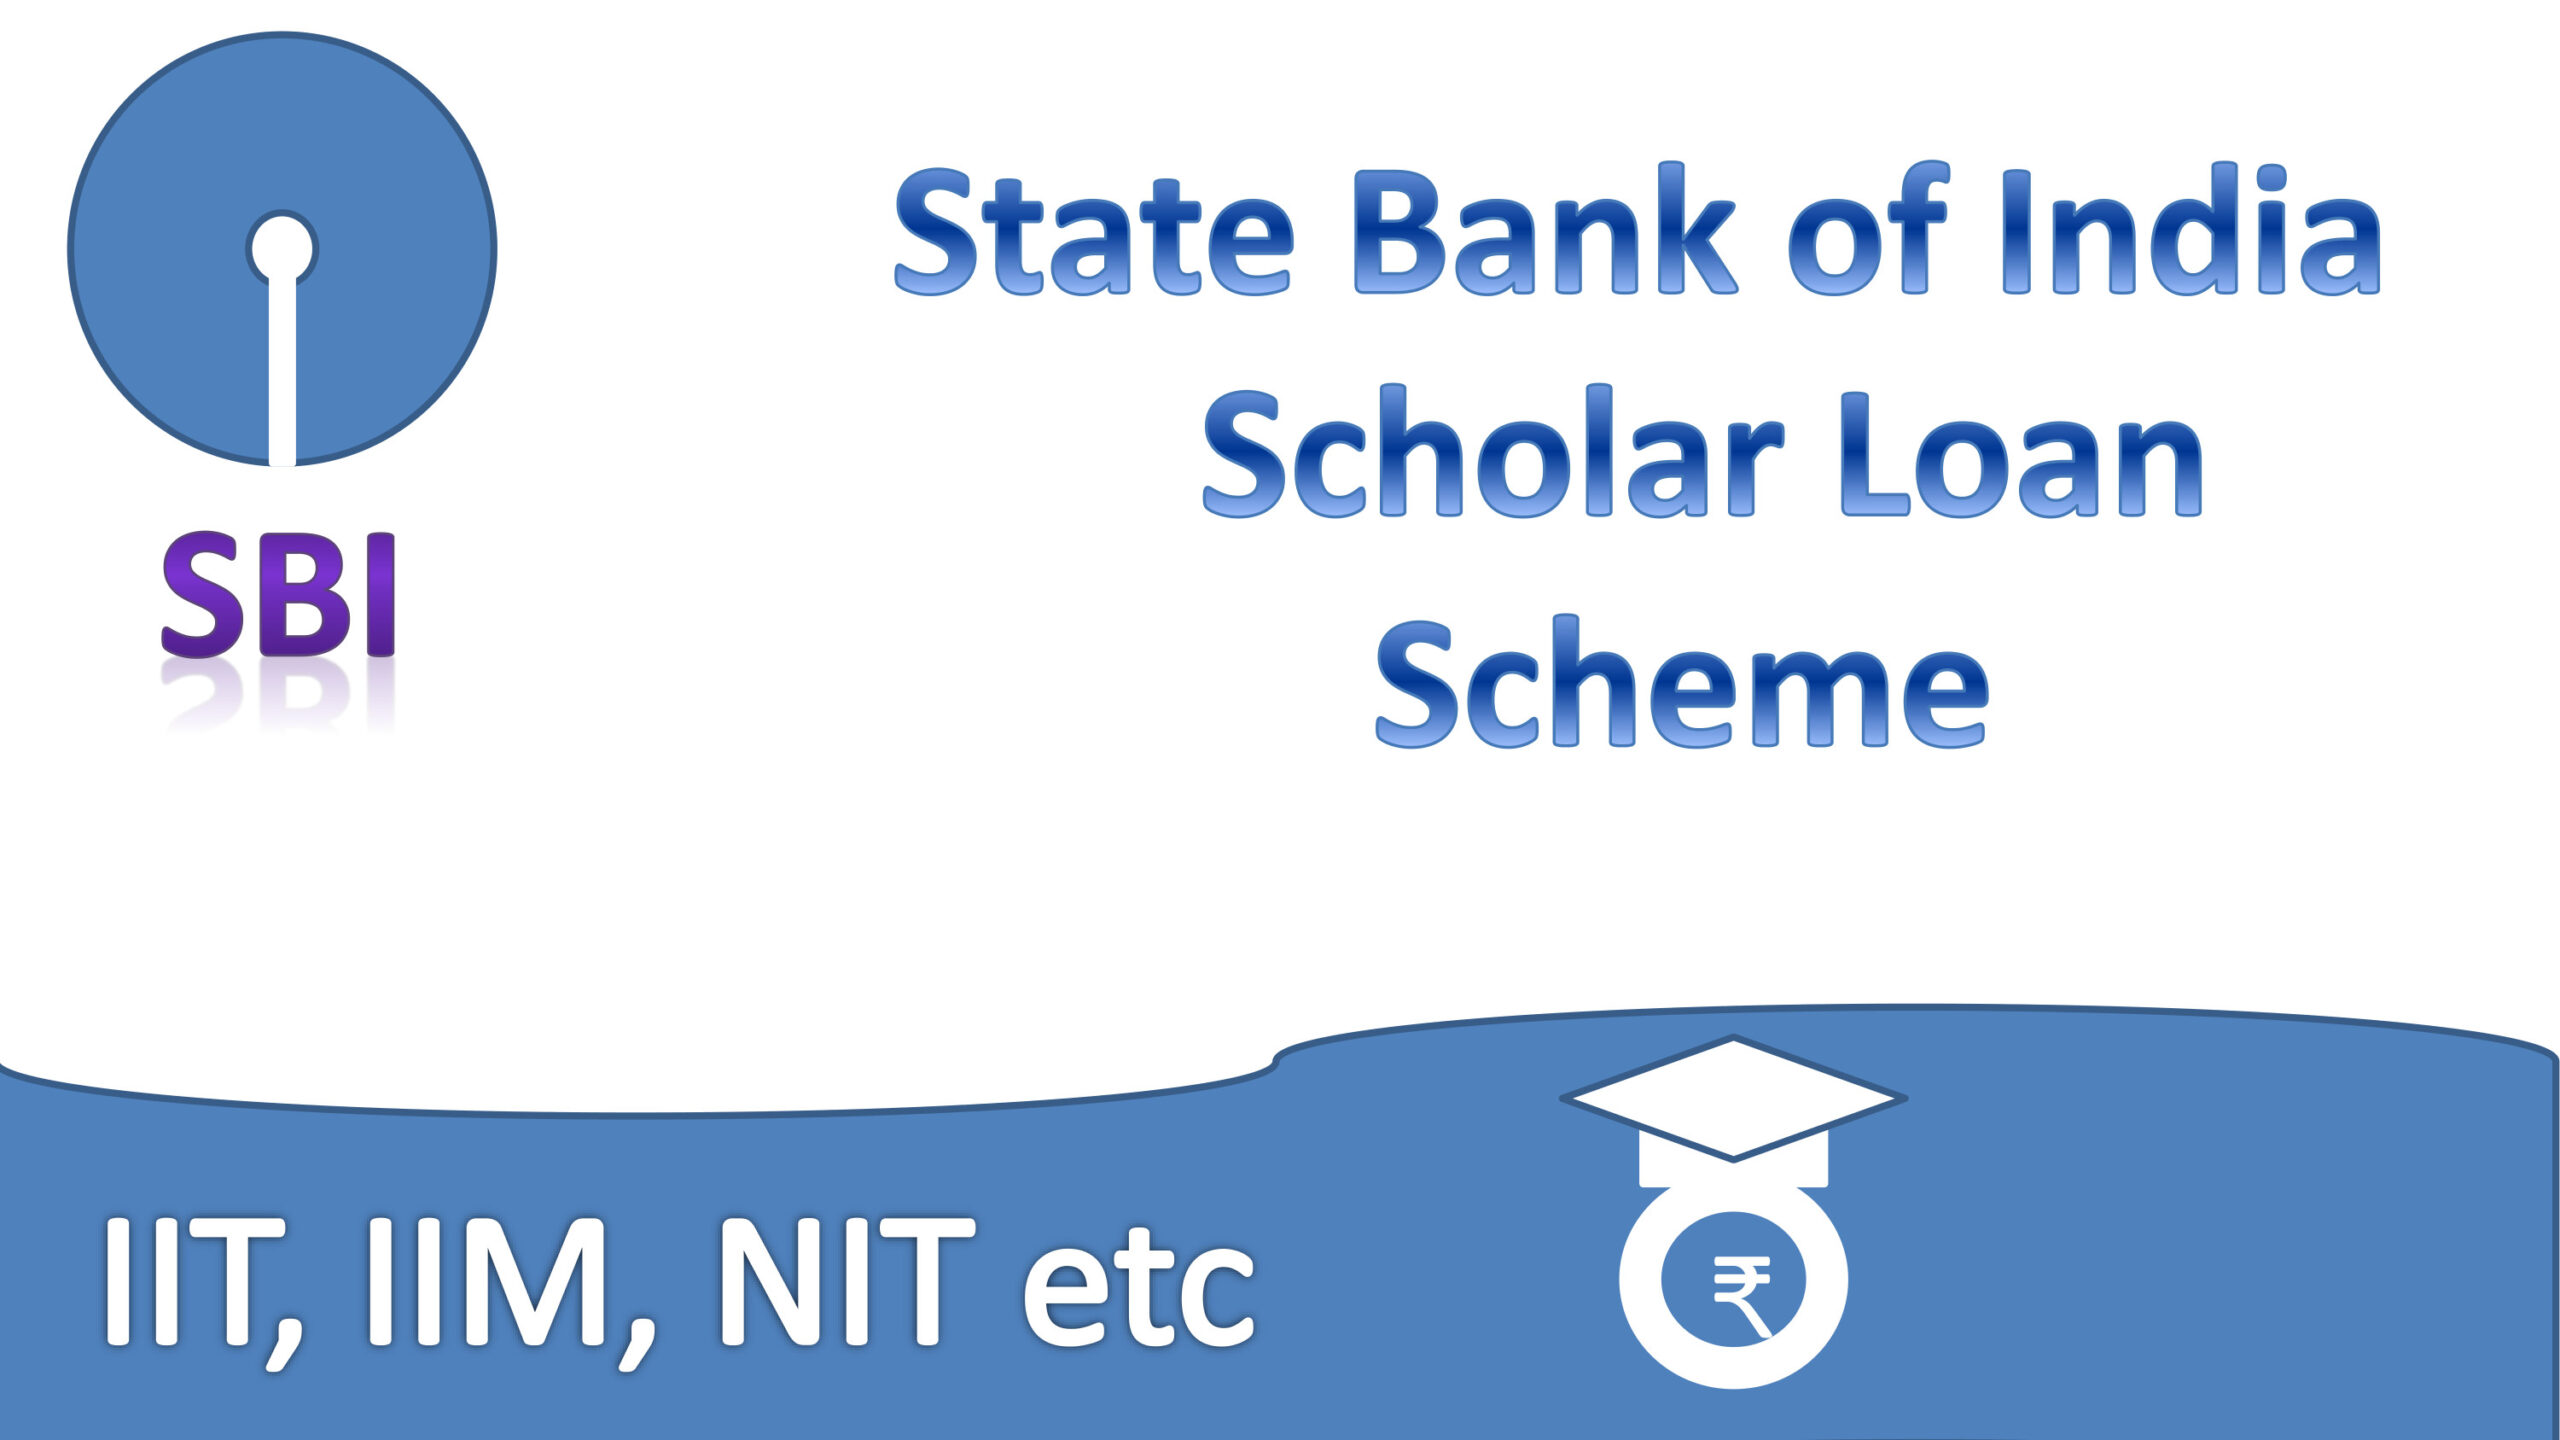 SBI Scholar loan scheme